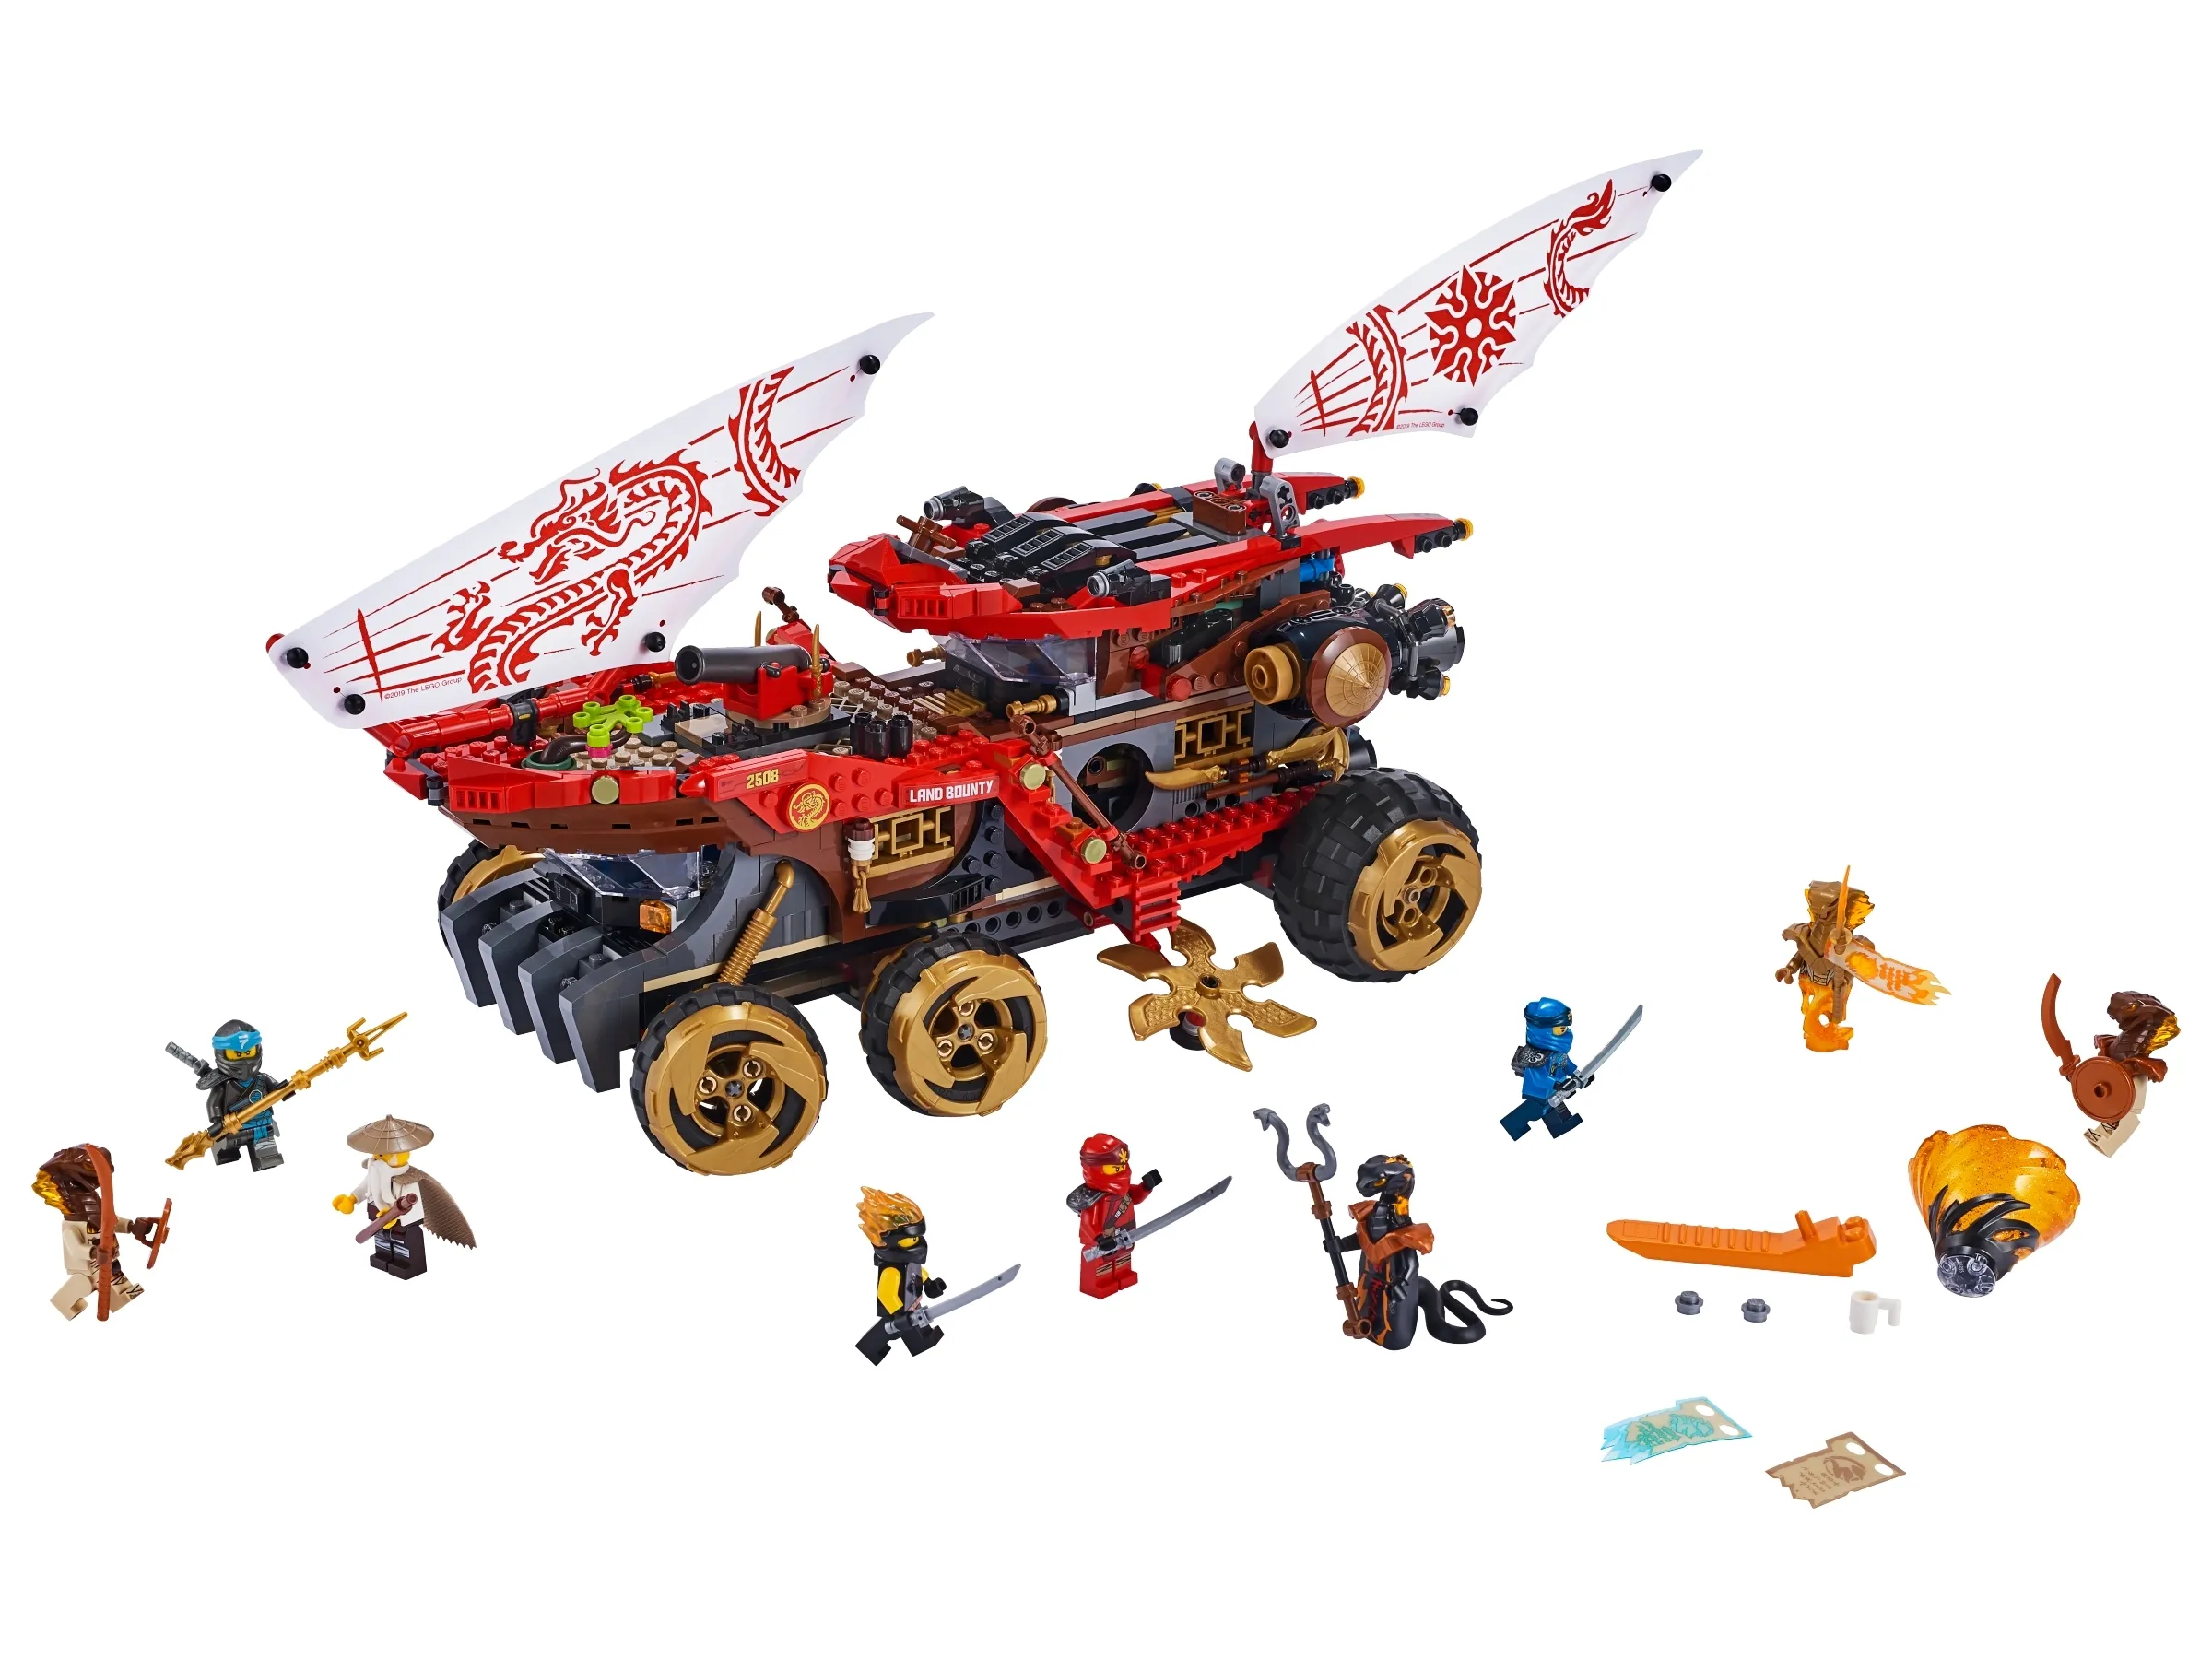 LEGO NINJAGO Char Minifigure Black Snake From Set 70675 / 70677